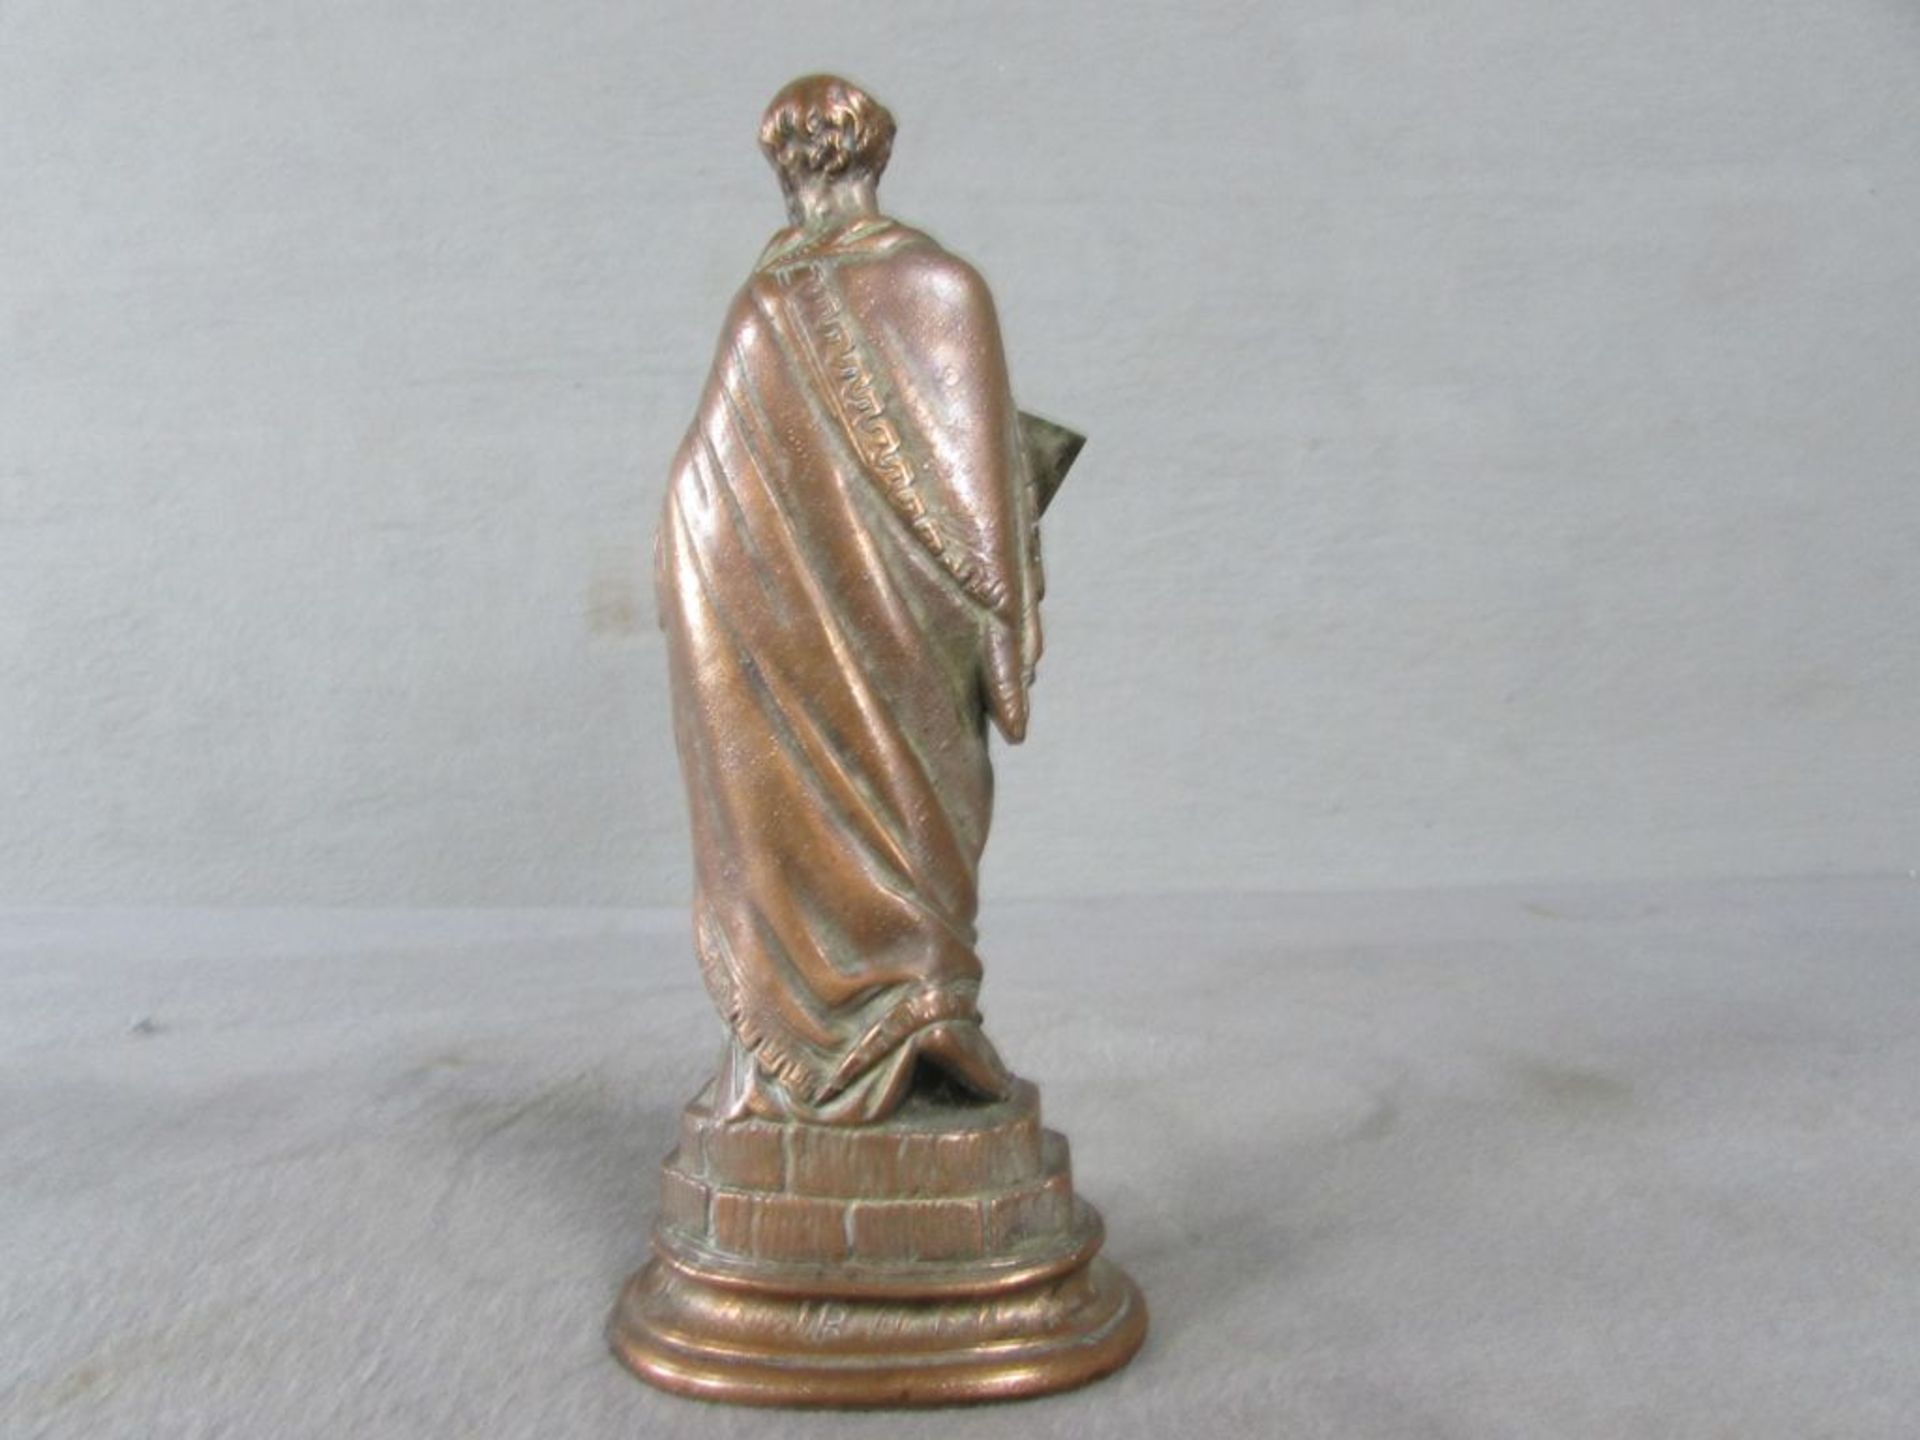 Skulptut Heiliger rückseitig monogramiert Kupferguß 20cm hoch - Bild 2 aus 2